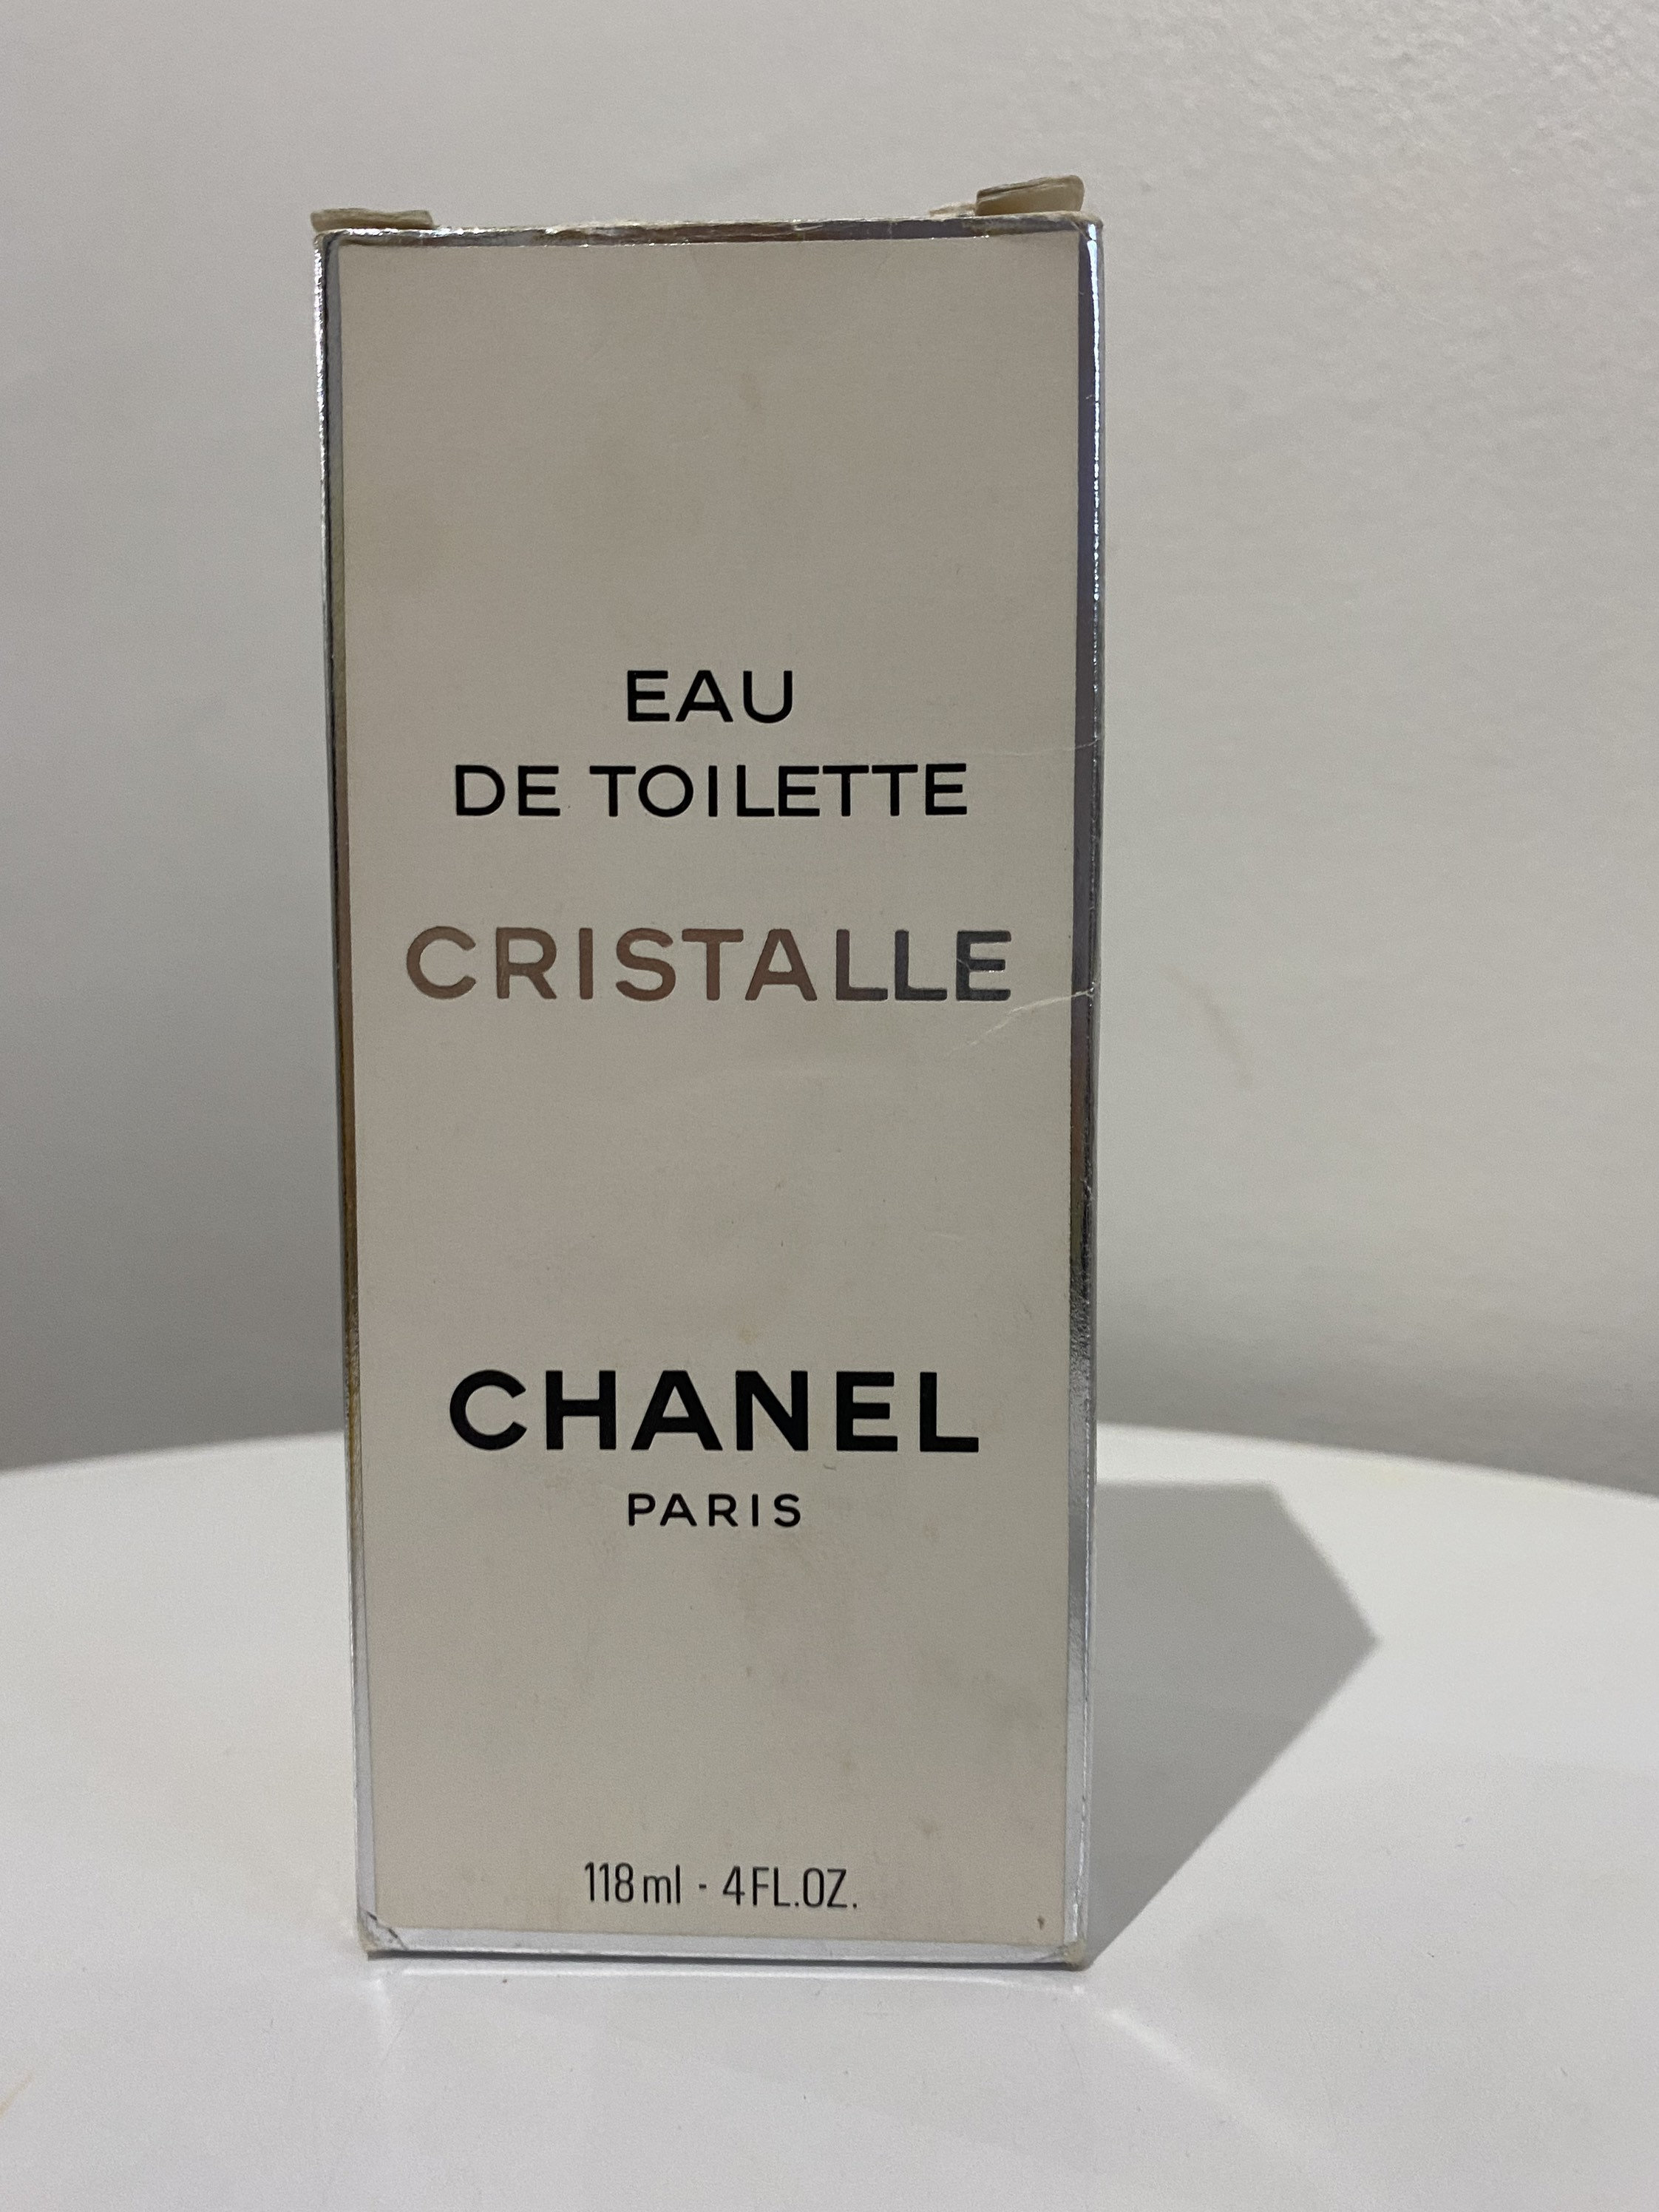 Chanel Cristalle Edt 118 Ml. Rare Vintage 1974. 